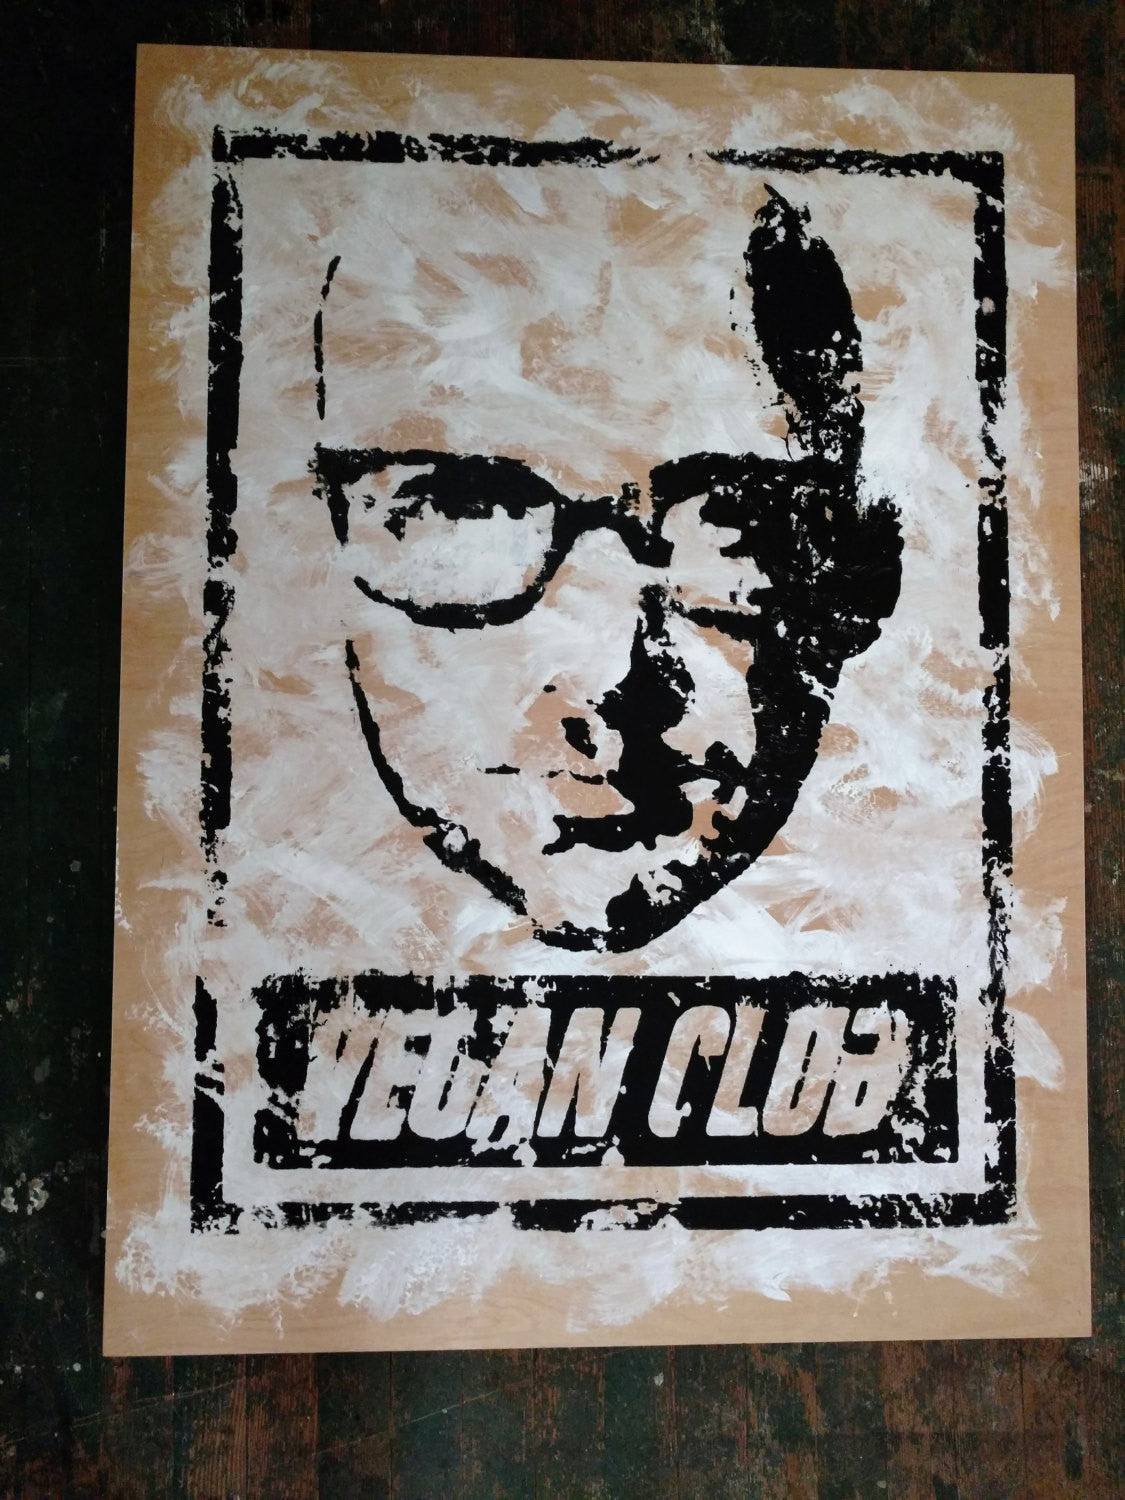 30x40 Original Artwork "Vegan Club" featuring your fav vegan celeb Moby signed L3F0u (1 of X)